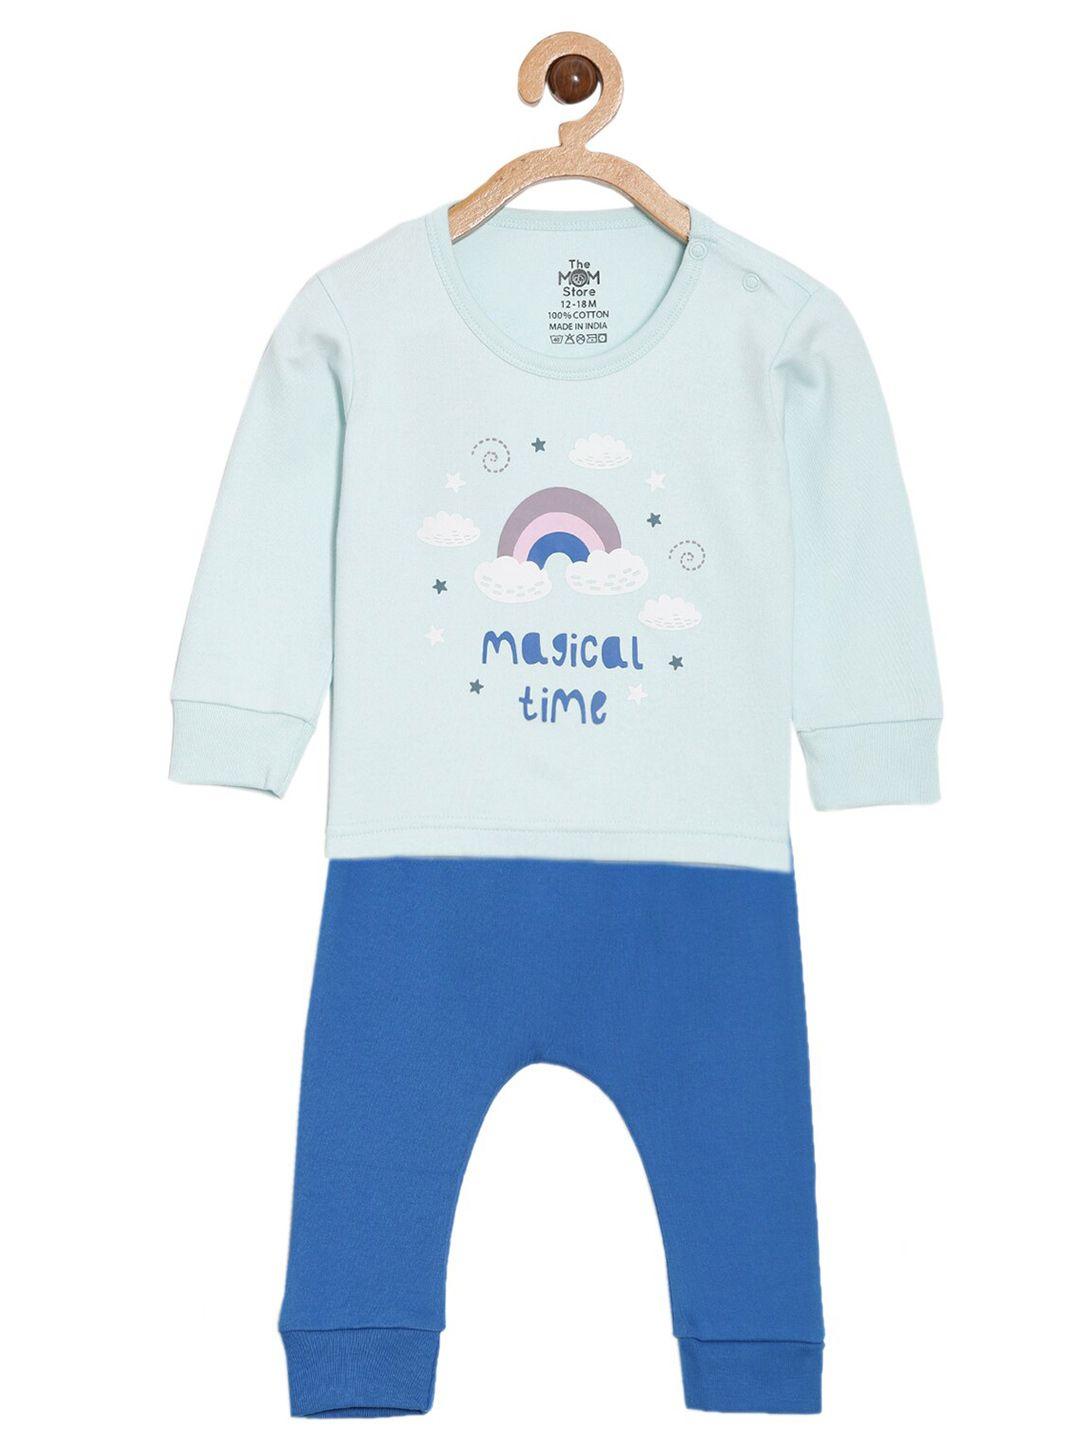 the-mom-store-unisex-kids-blue-&-white-printed-t-shirt-with-pyjamas